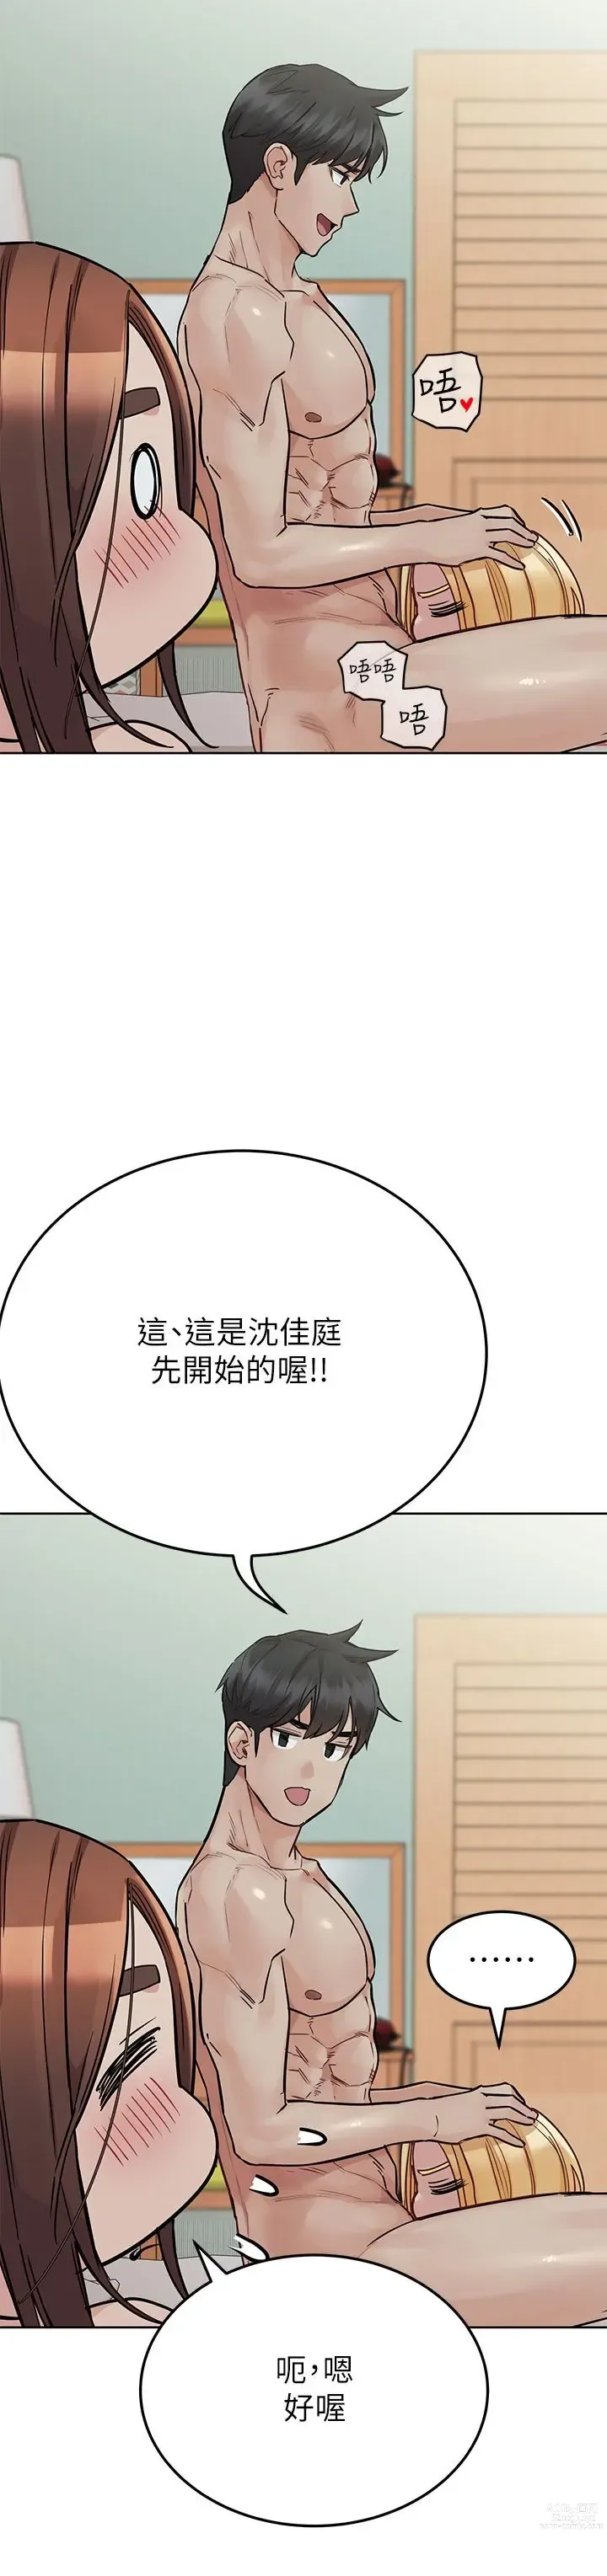 Page 4 of manga 要对妈妈保密唷! / Don‘t tell Mom! 71-100 (三）